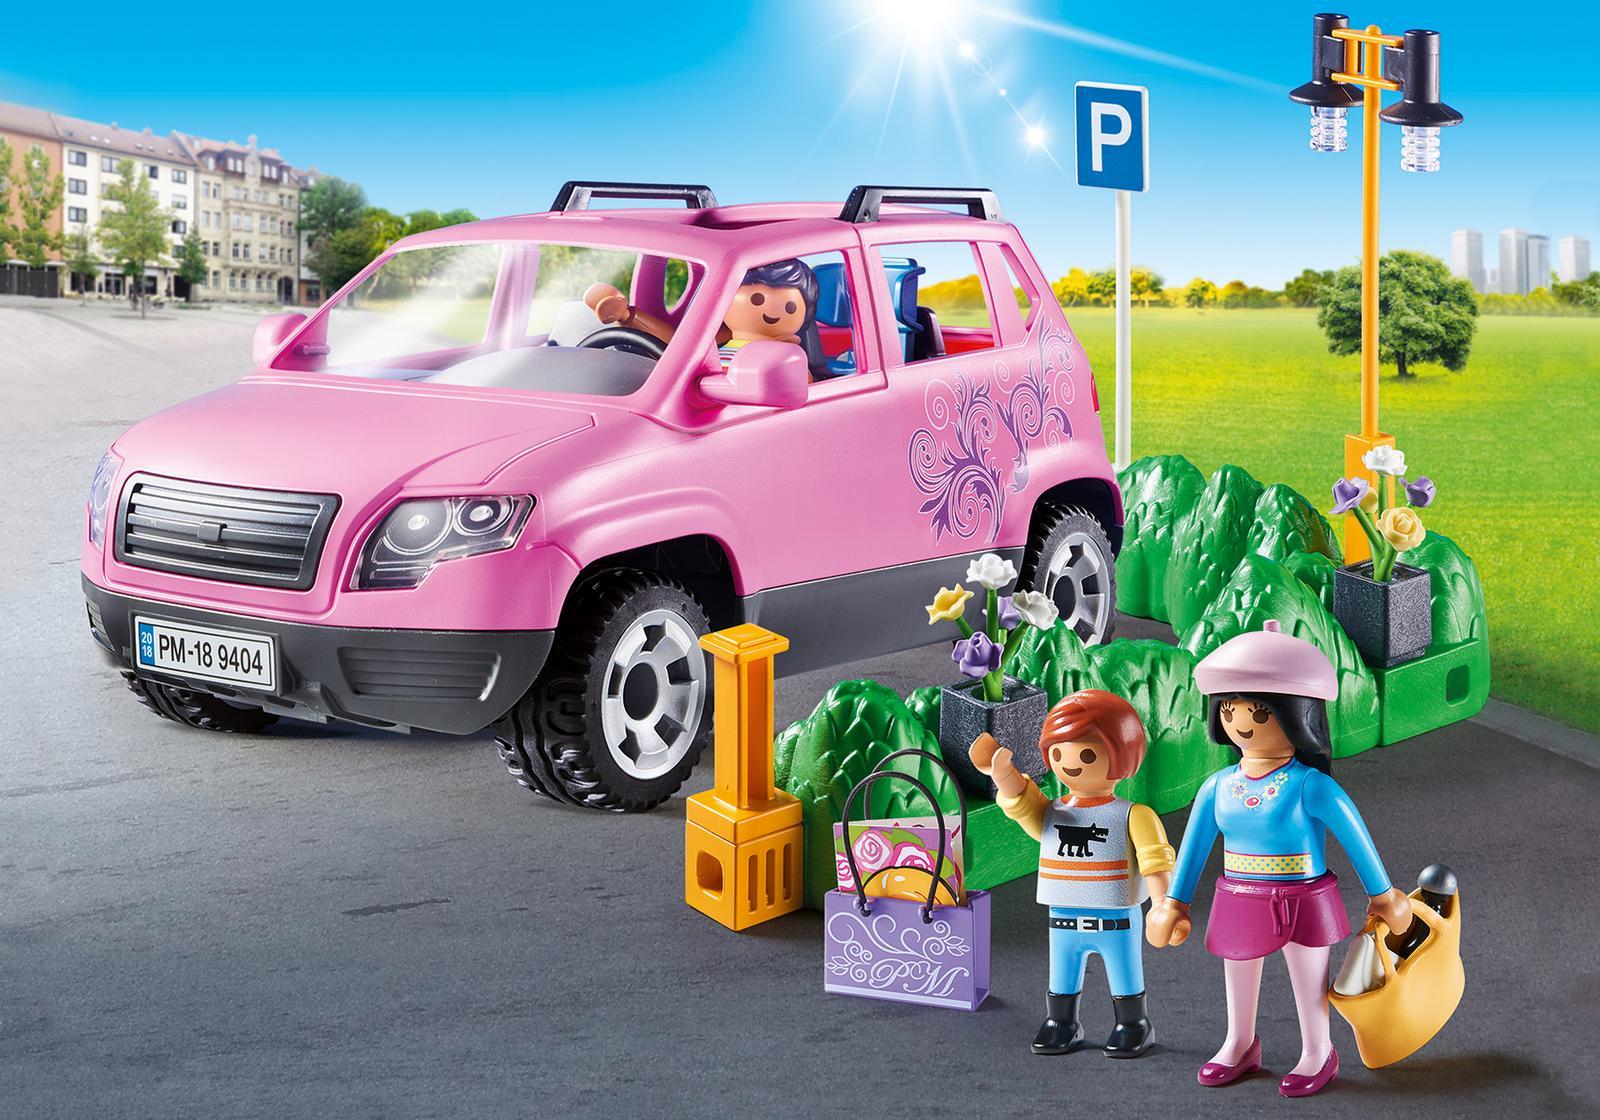 Playmobil City Life Familien-PKW mit Parkbucht - Aktion/Abenteuer - 5 Jahr(e) - Mädchen - Mehrfarben - Menschen - 3 Stück(e) (9404)